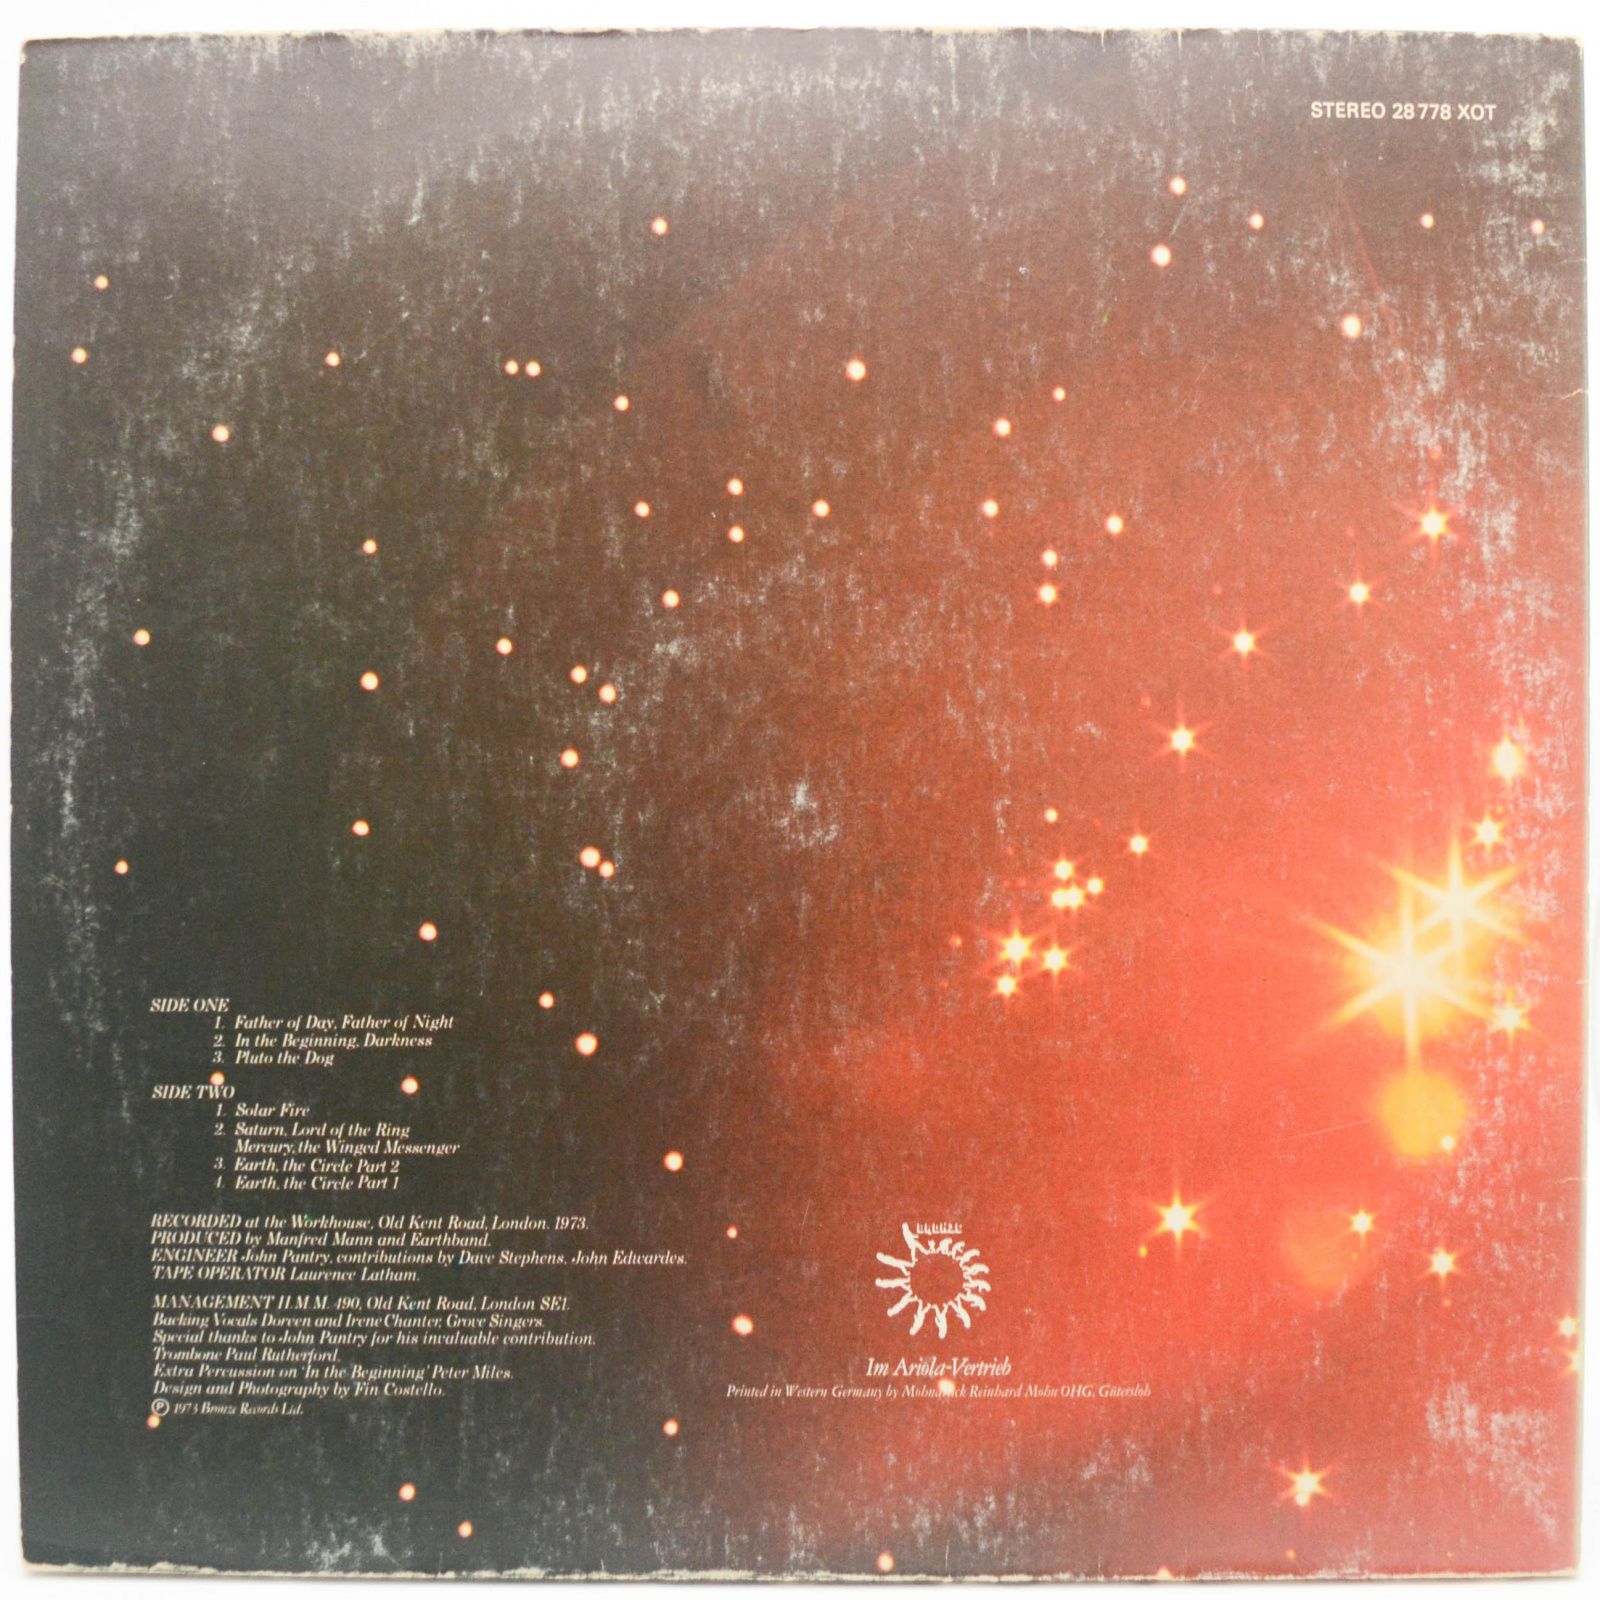 Manfred Mann's Earth Band — Solar Fire, 1973